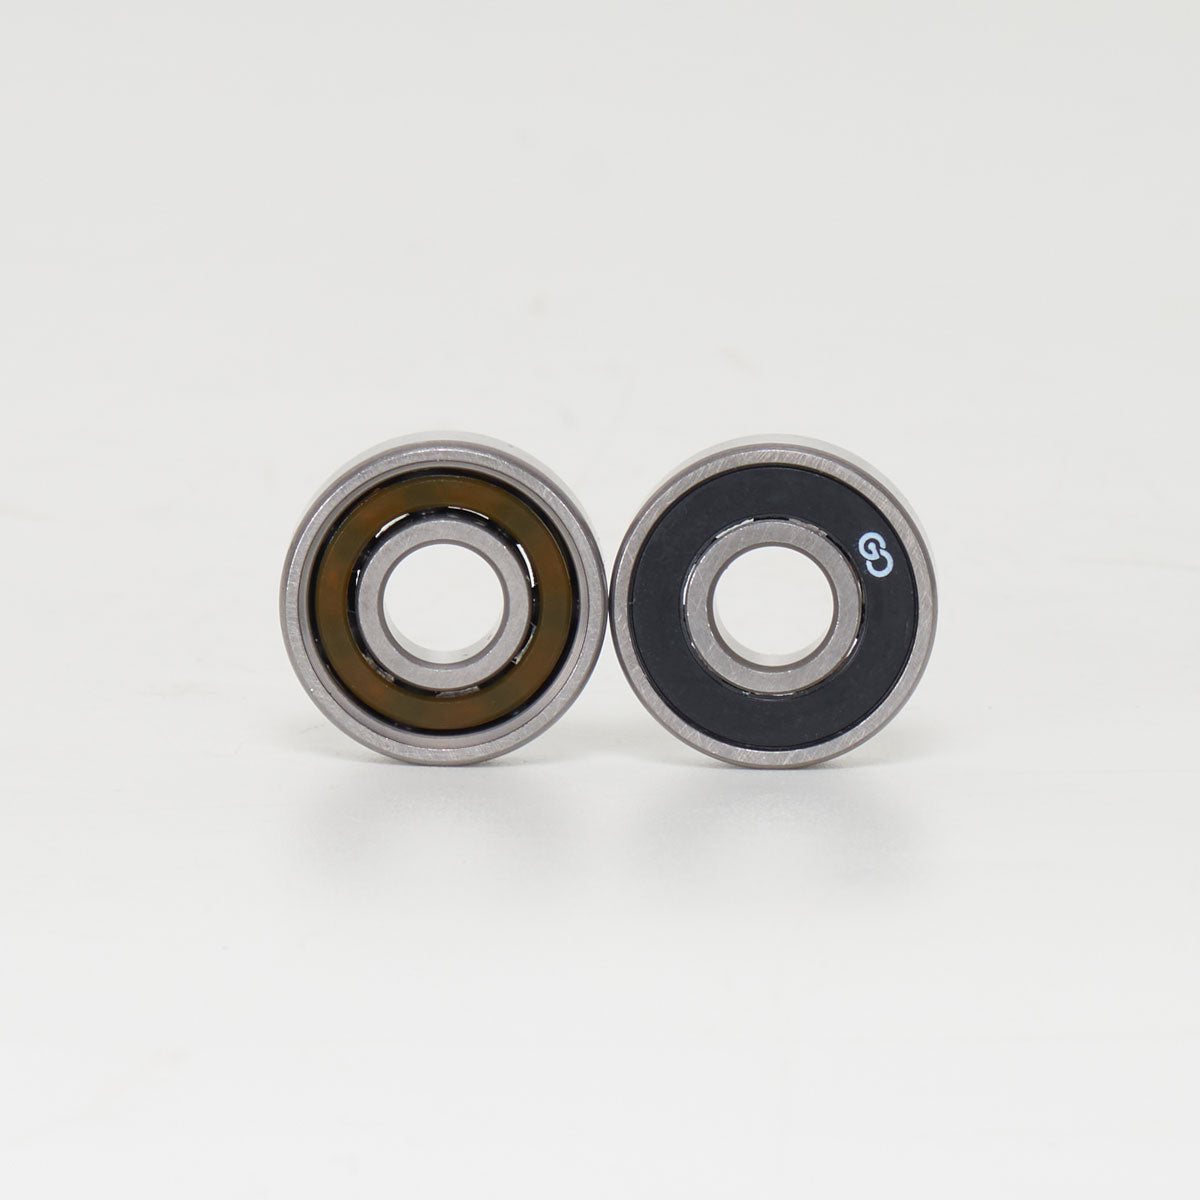 Go Project Nitride Ceramic Skate Bearings - 8 Set